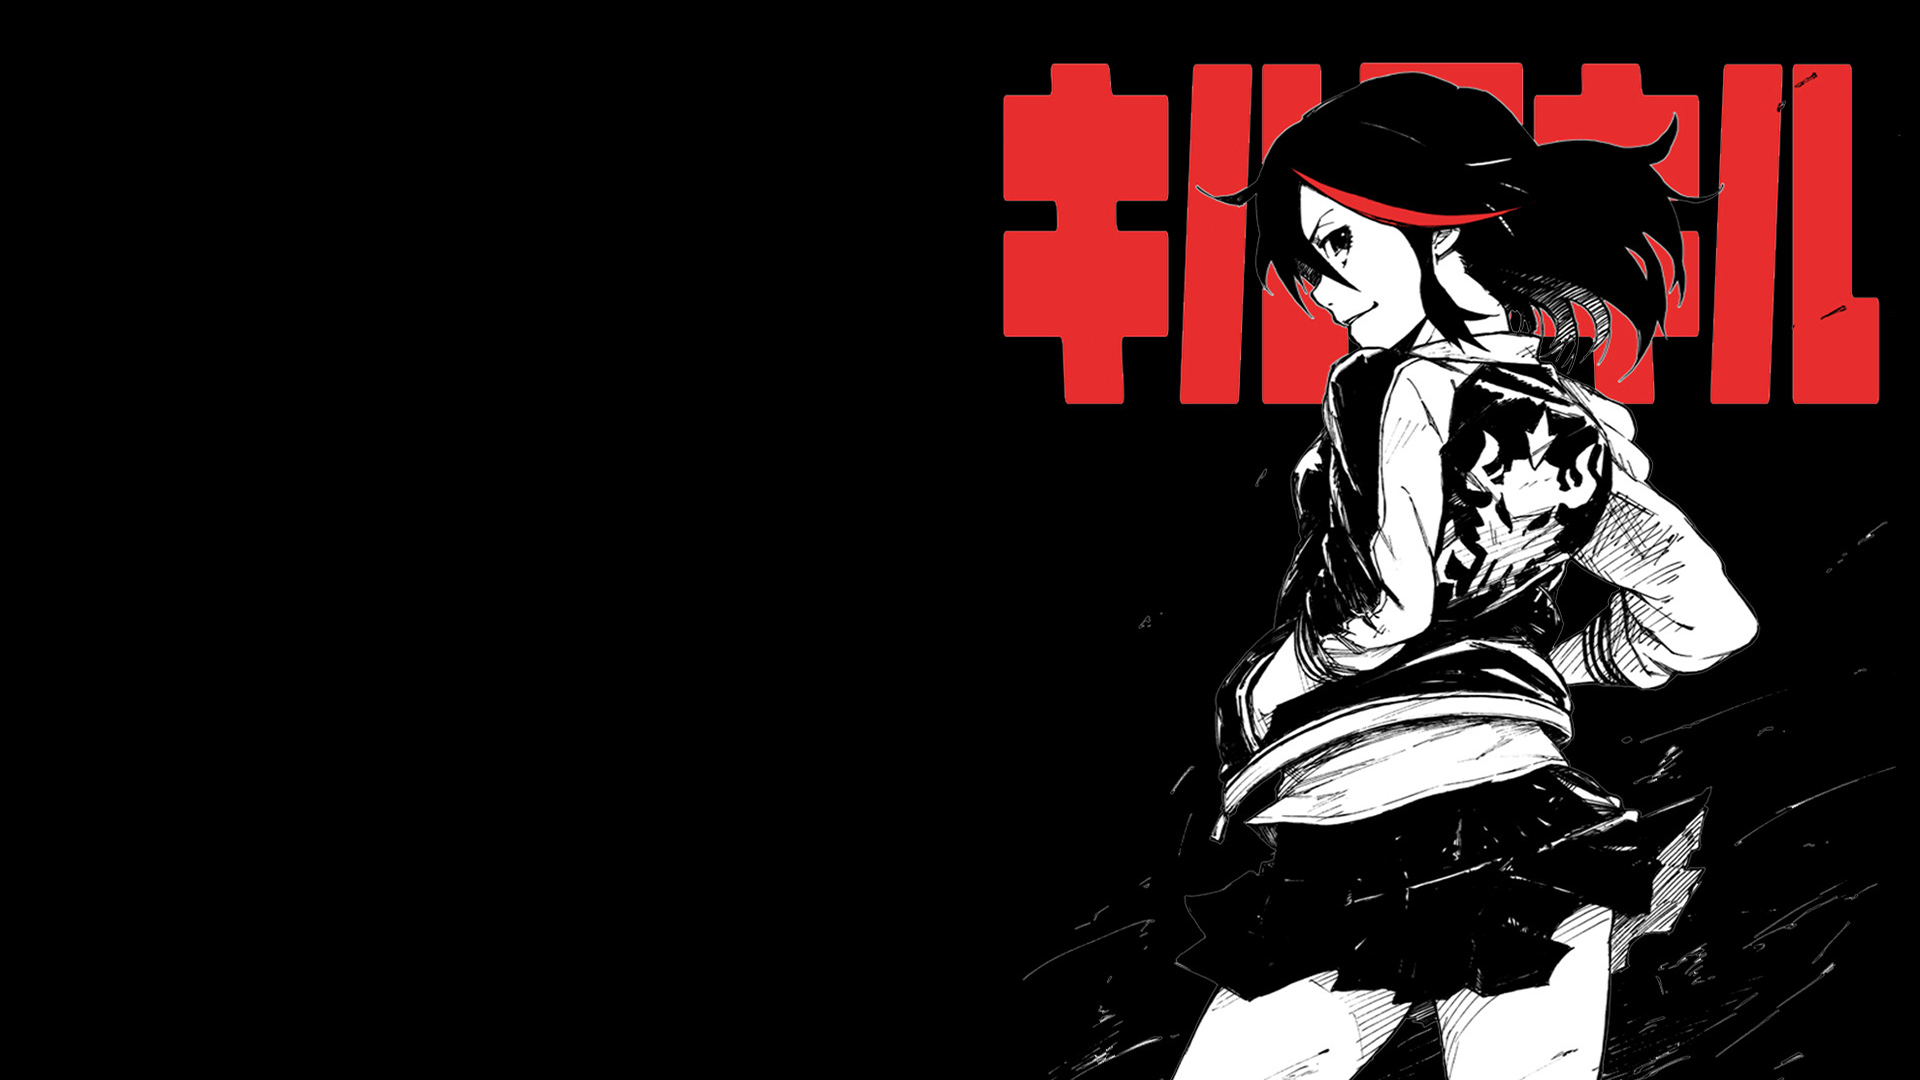 Téléchargez des papiers peints mobile Animé, Ryūko Matoi, Kiru Ra Kiru: Kill La Kill gratuitement.